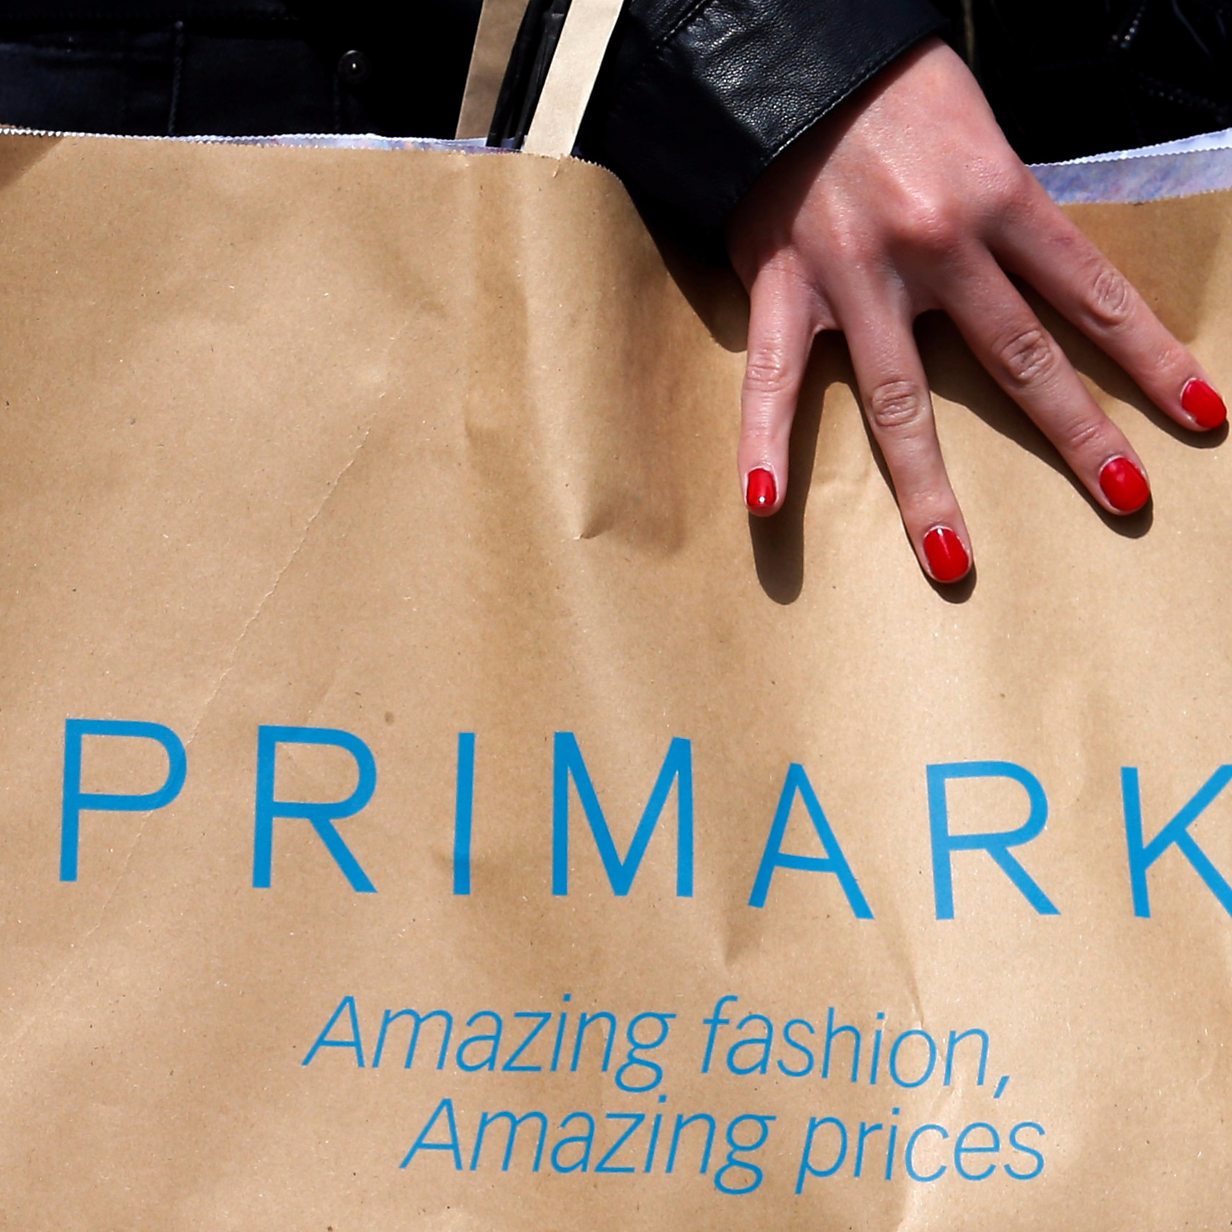 Primark says leggings still popular as comfort rules - BBC News